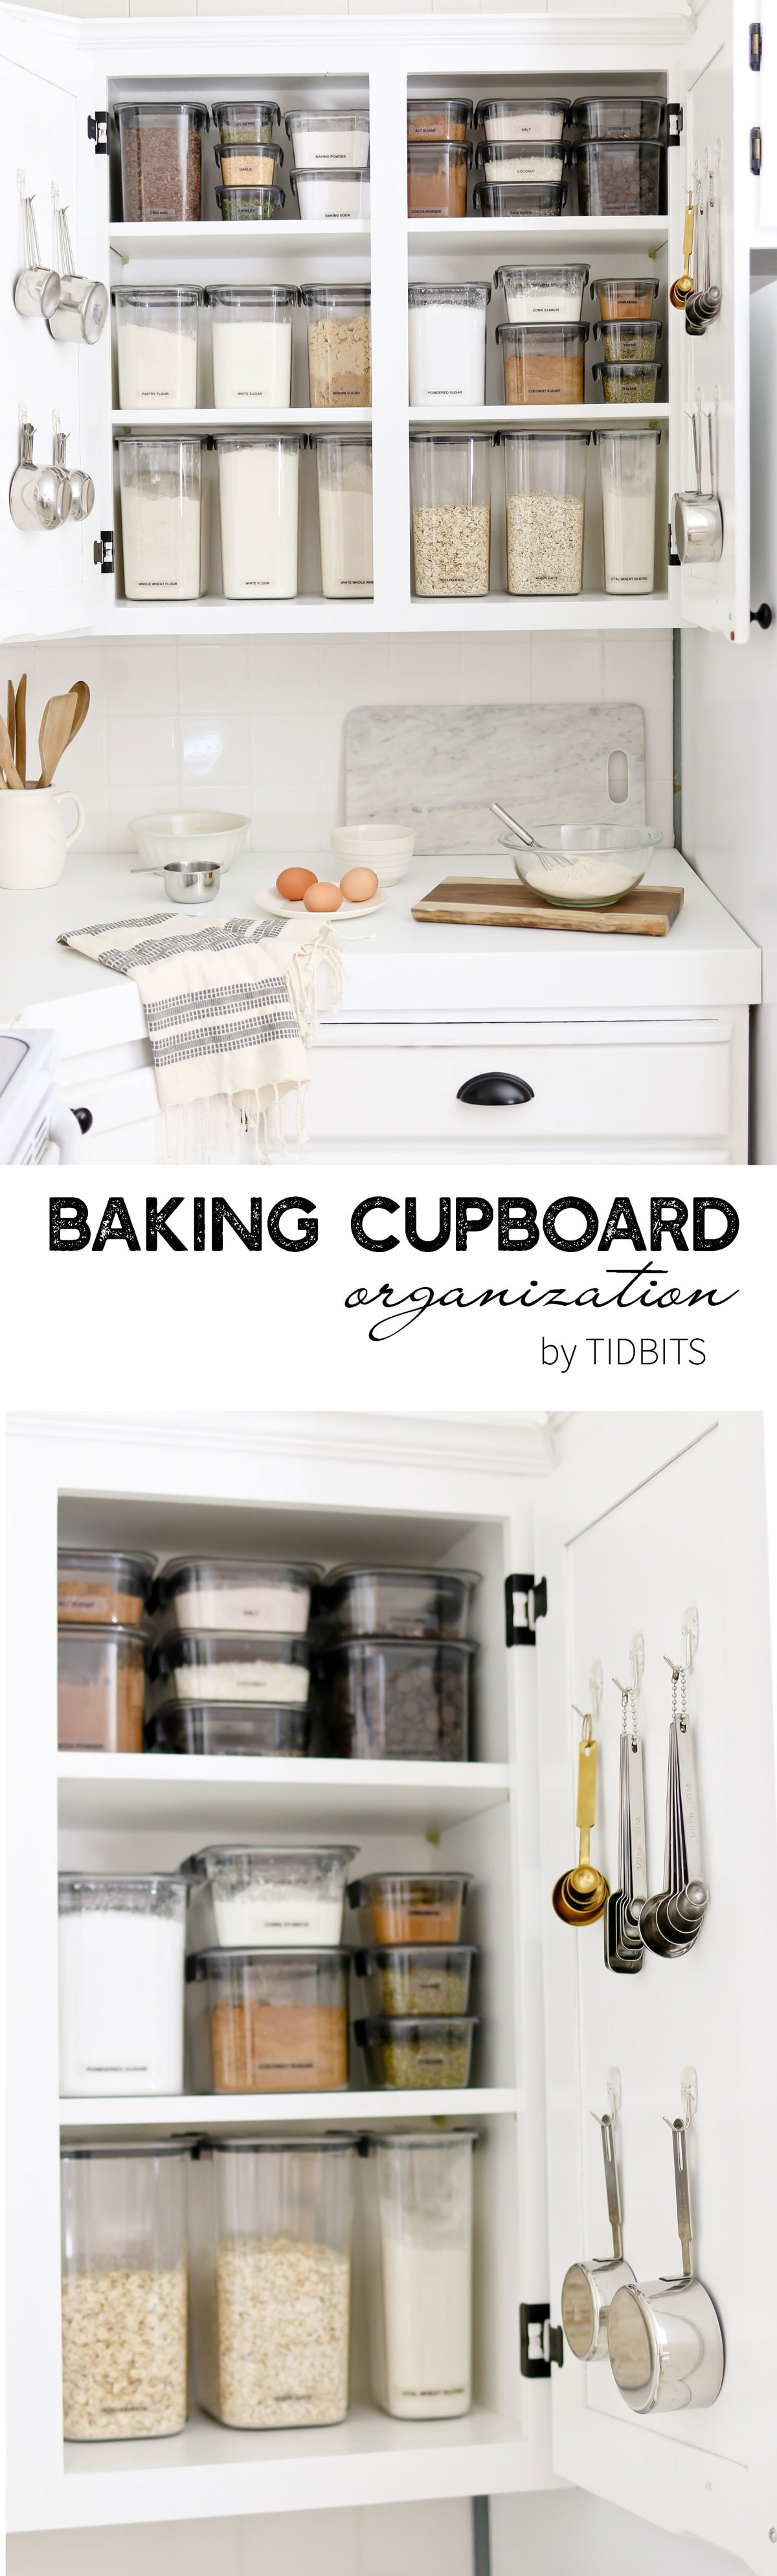 Baking Cupboard Organization by TIDBITS